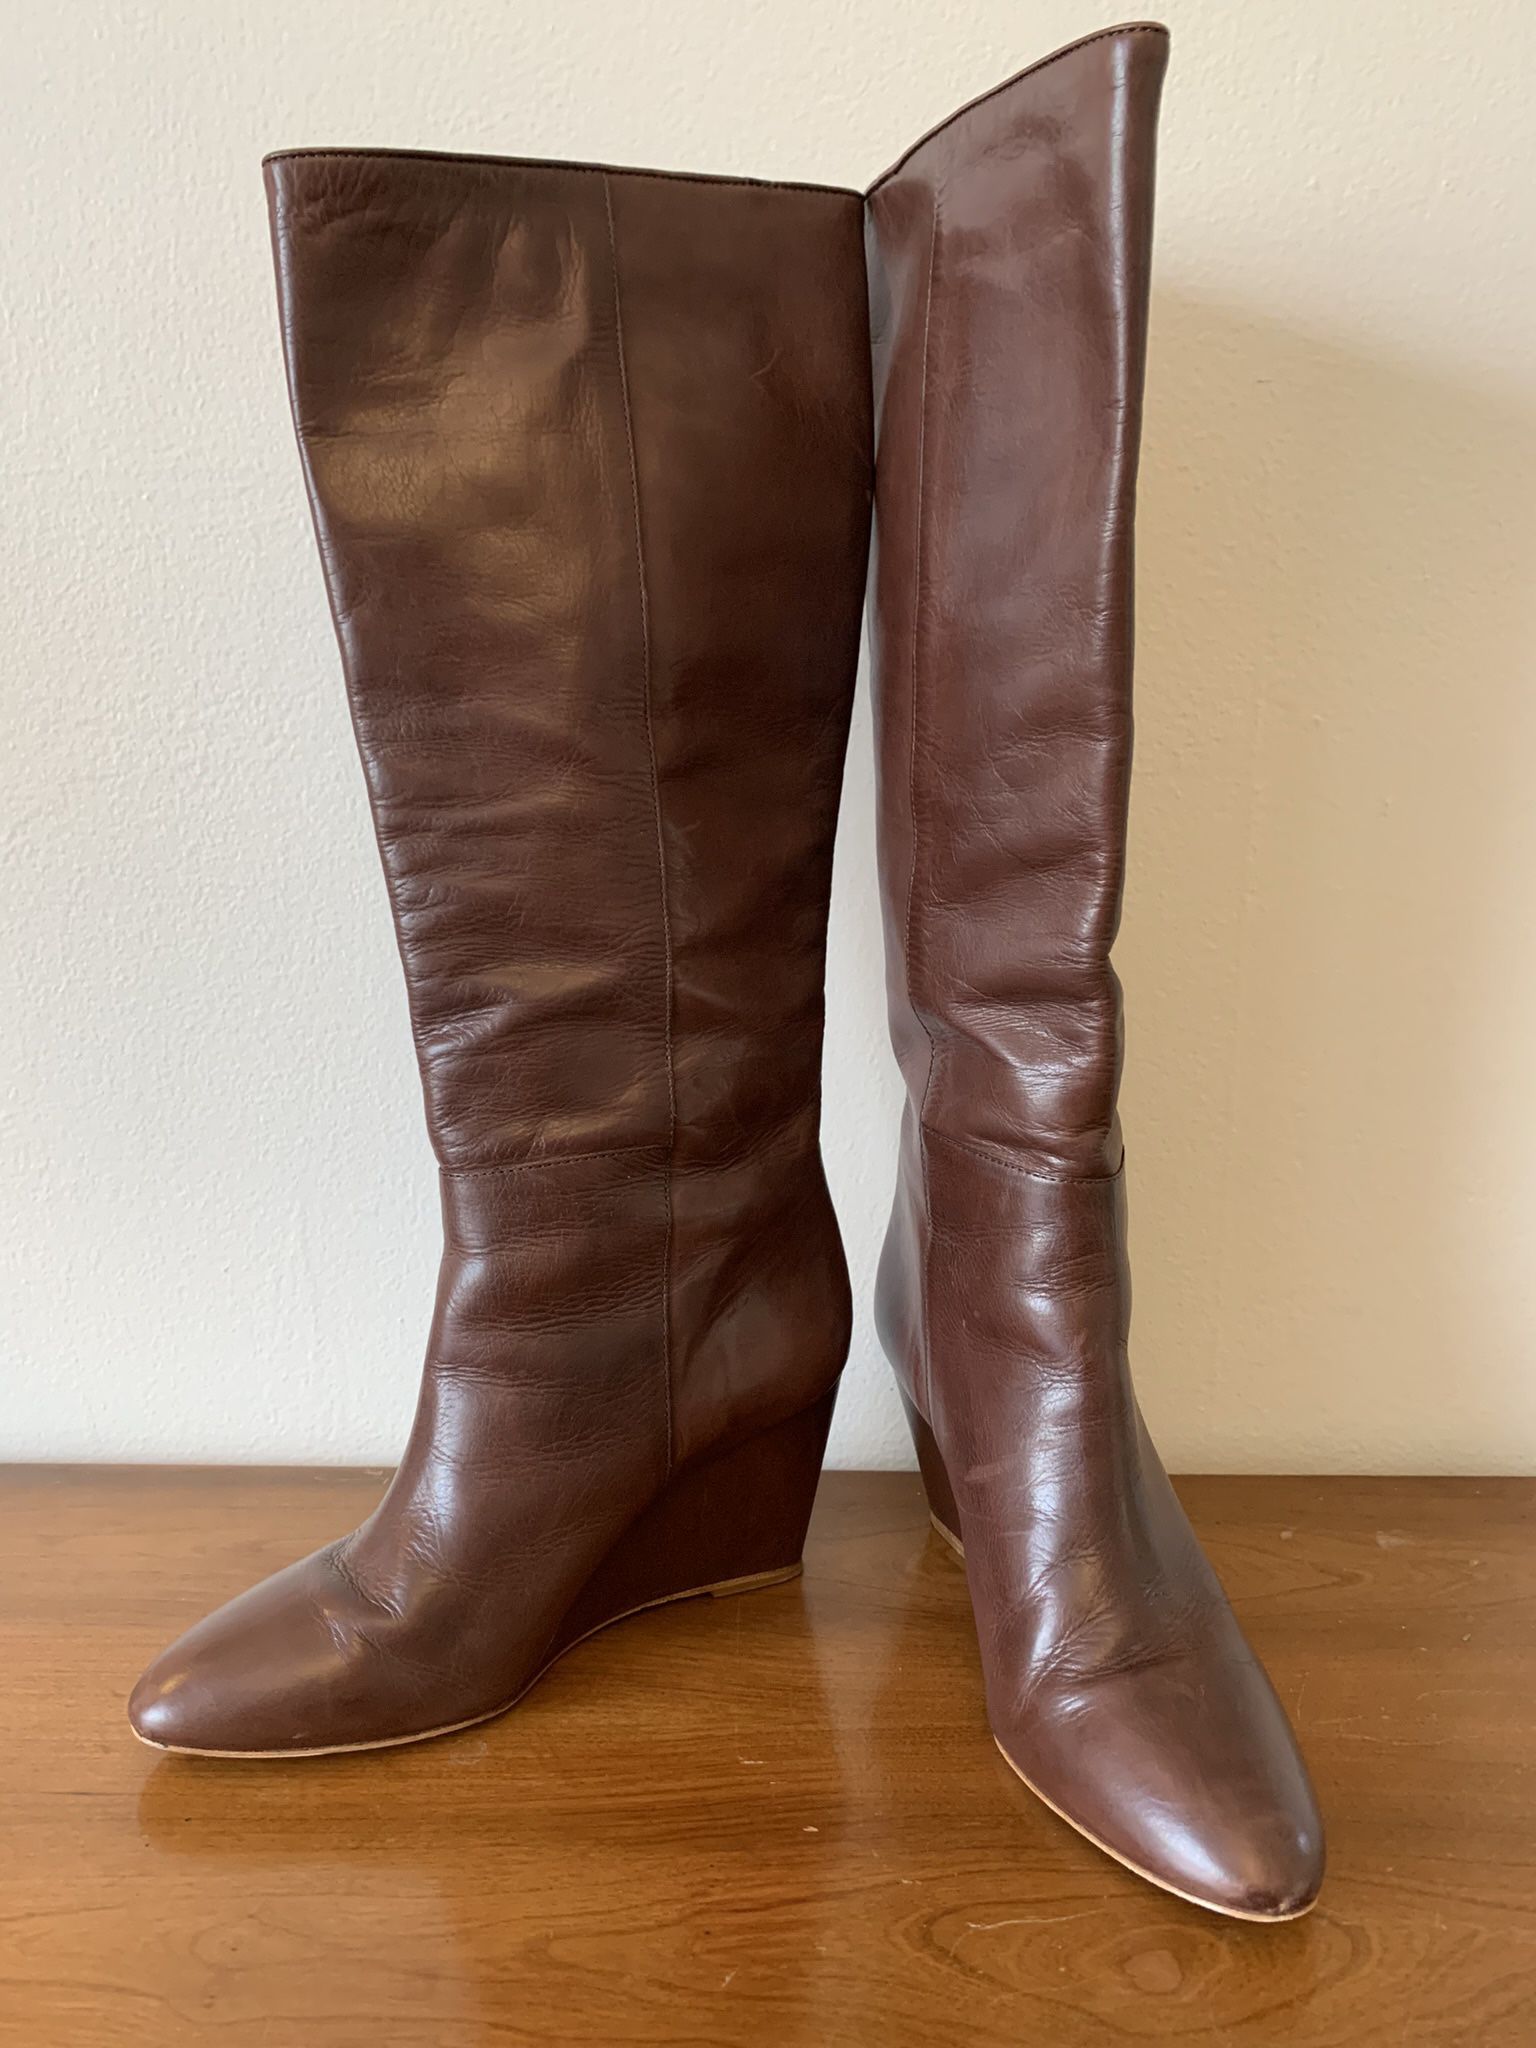 Loeffler Randall Designer Boots (size 7)